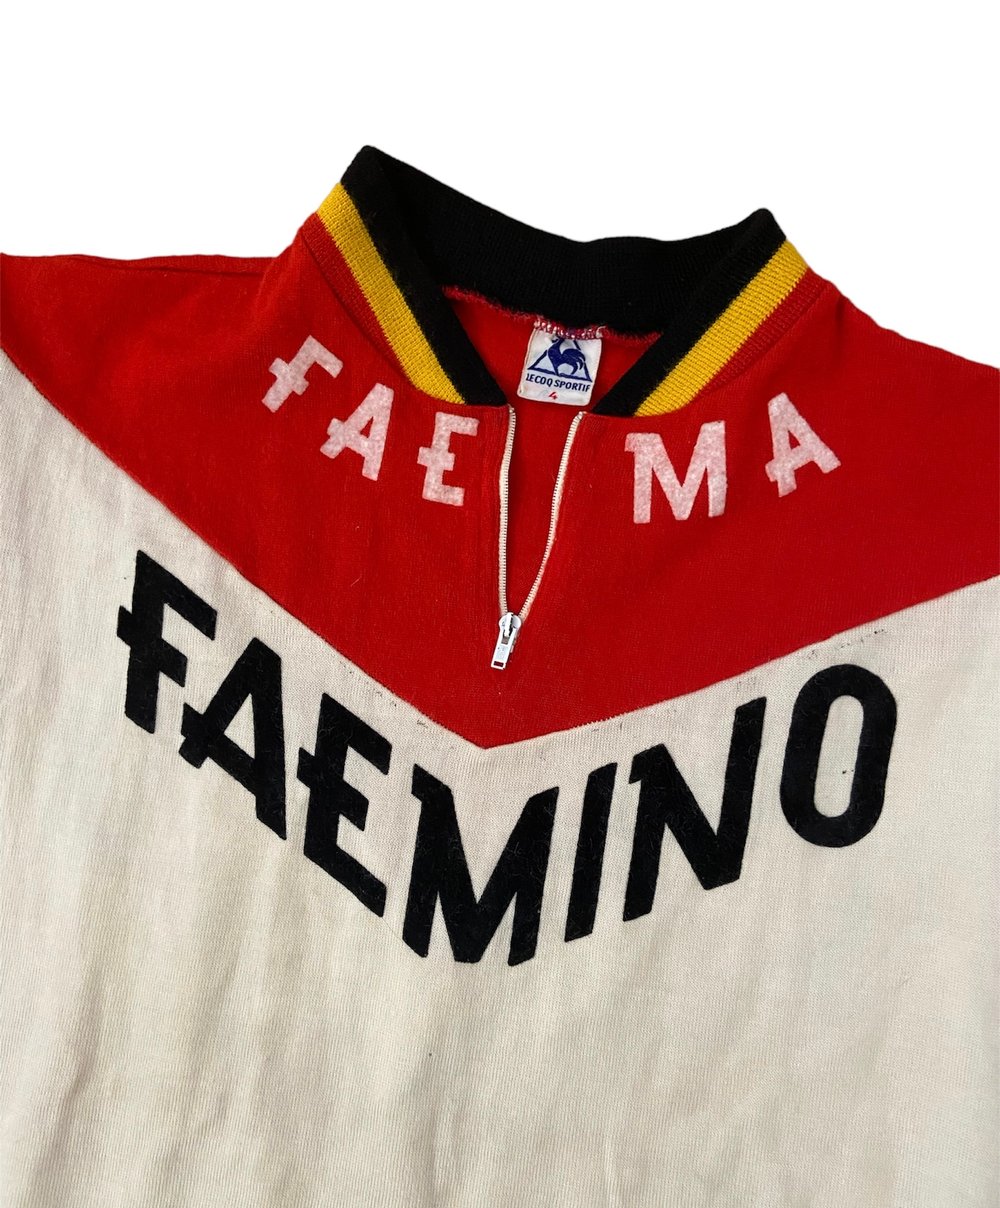 1970 - Faemino-Faema - Tour de France edition made by Le Coq Sportif